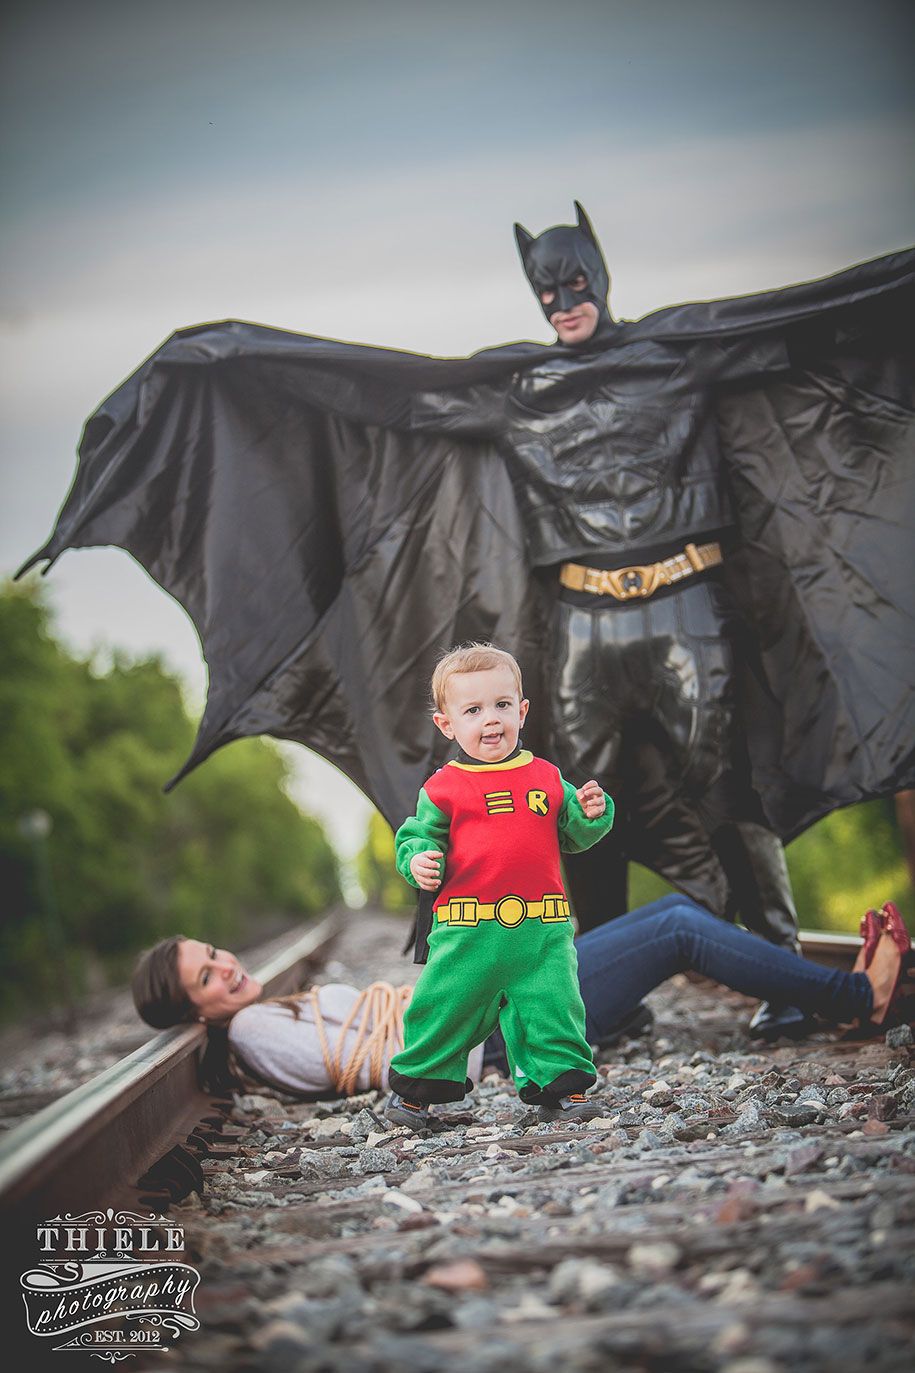 Vater-Sohn-Überraschung-Batman-Robin-Fotoshooting-Eric-Thiele-13